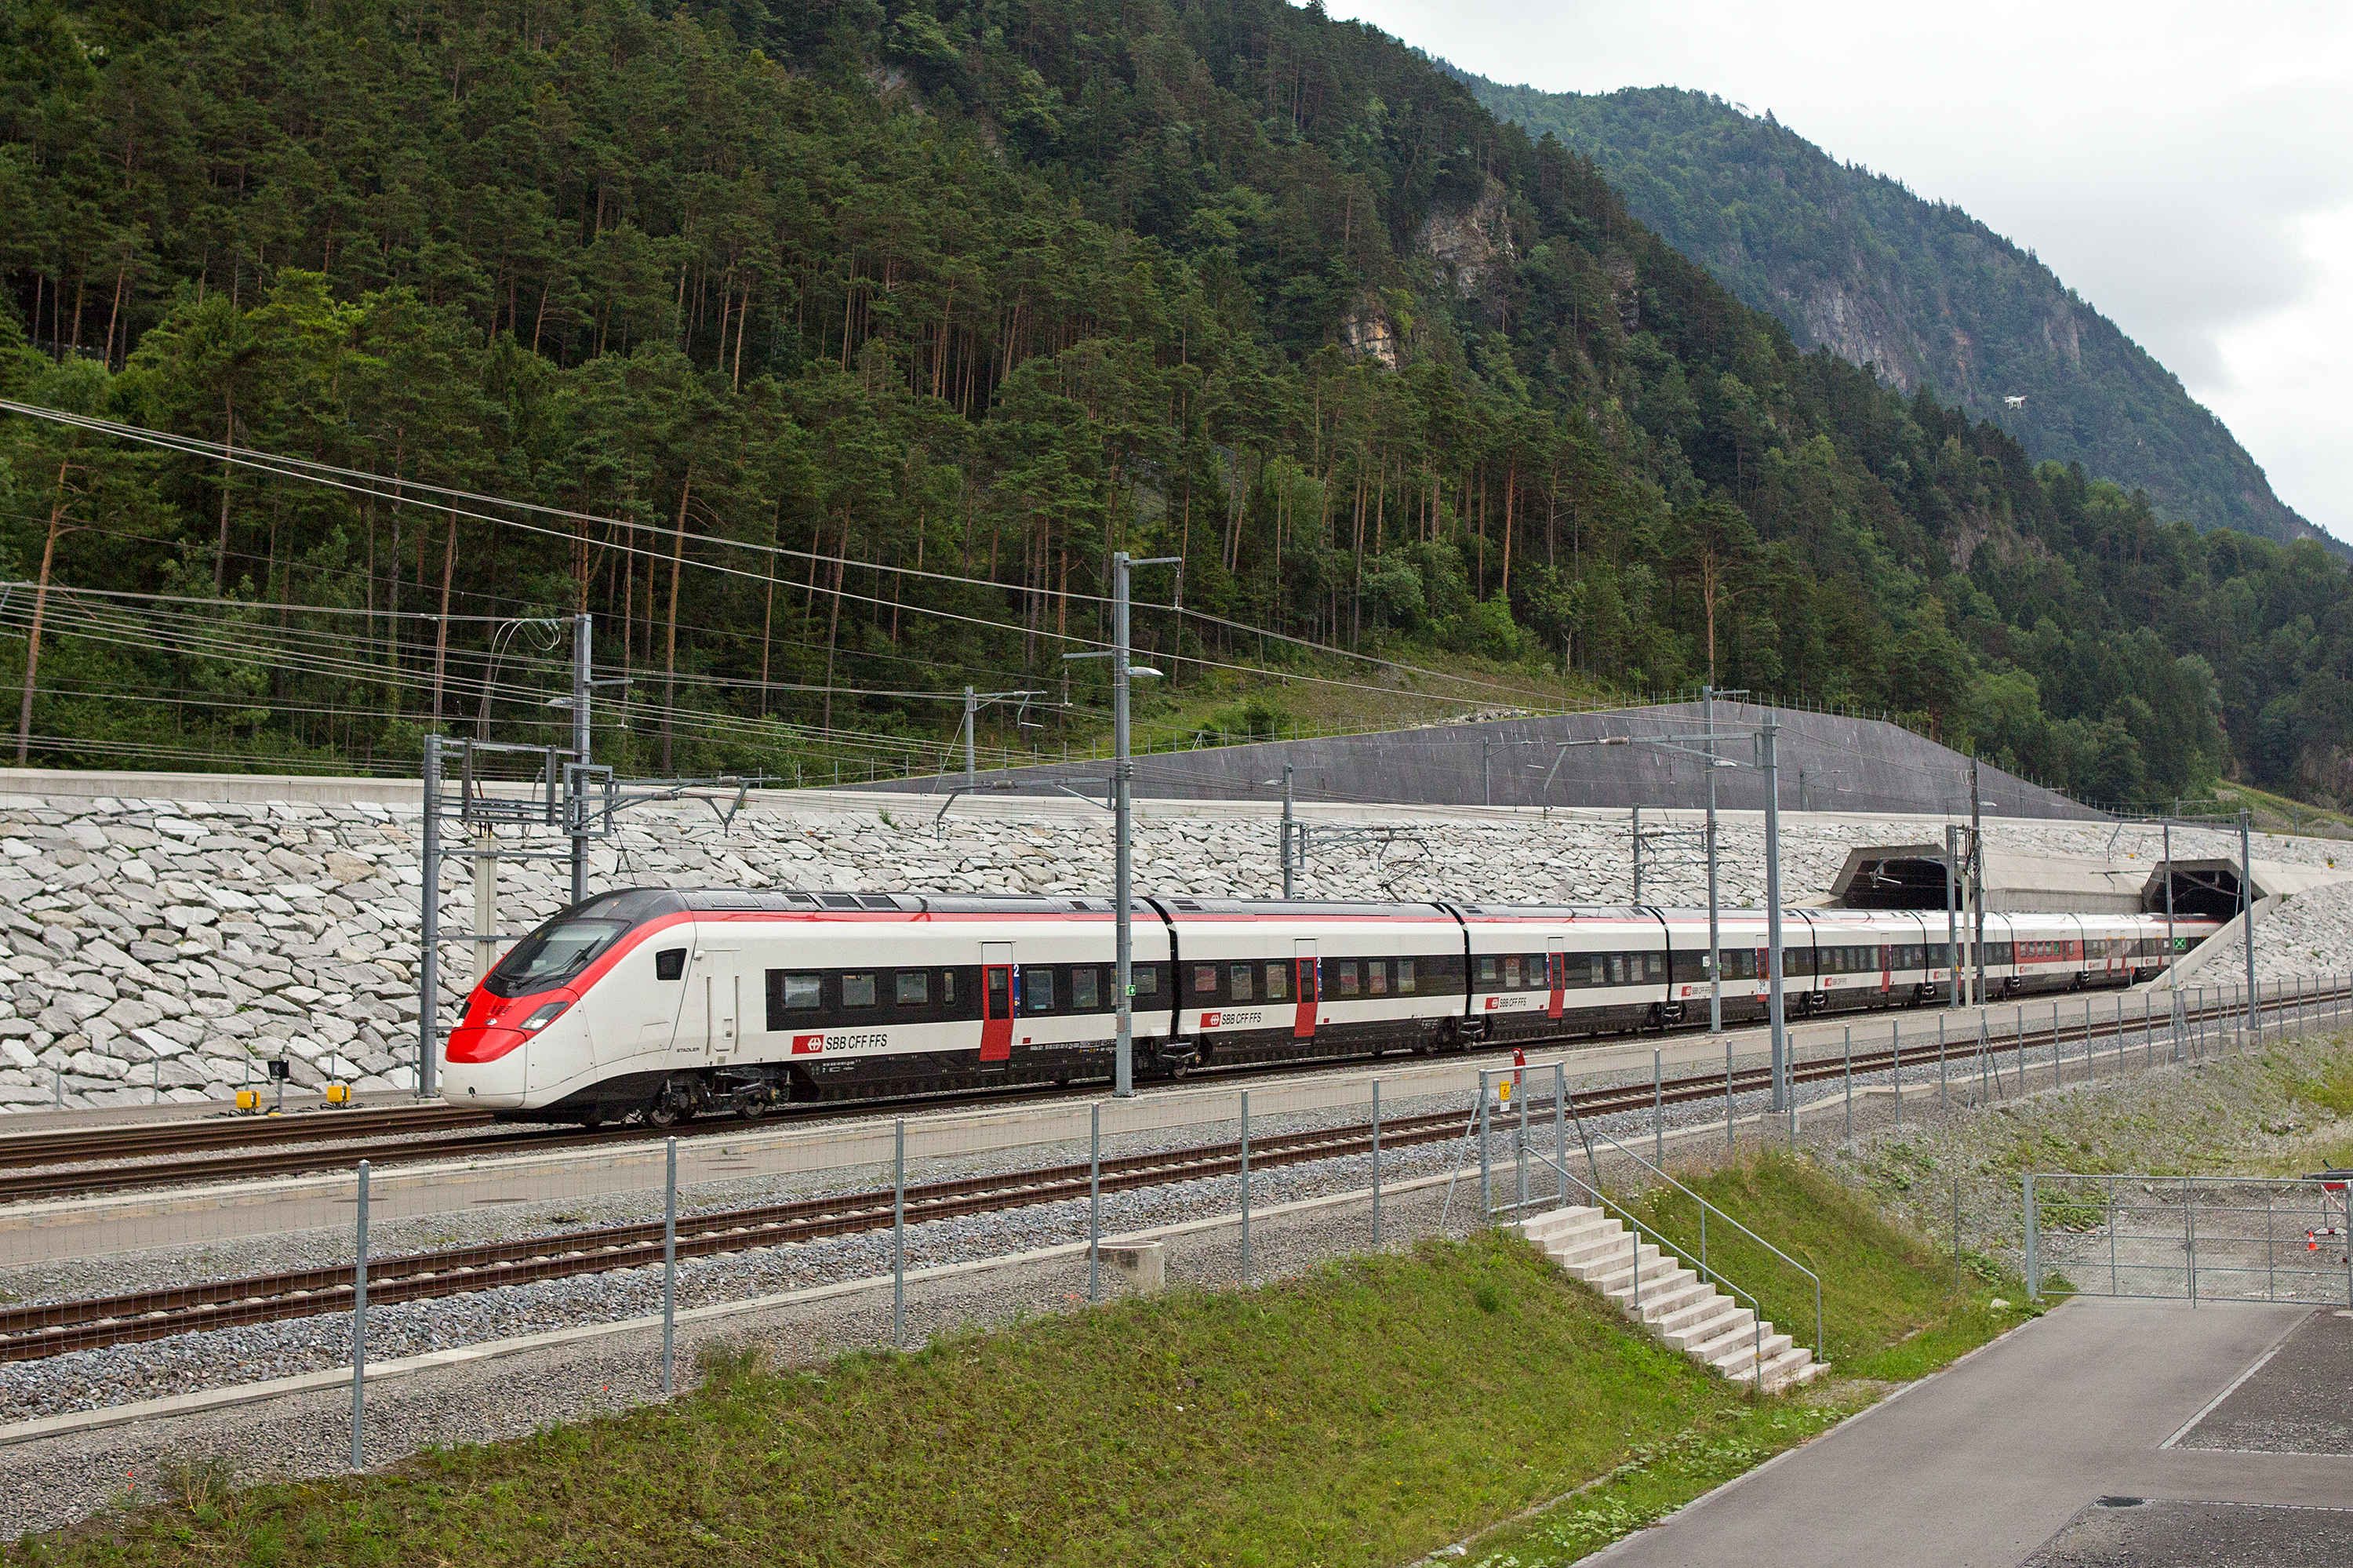 The new 'Giruno' passenger train runs on the Gotthard line © SBB CFF FFS